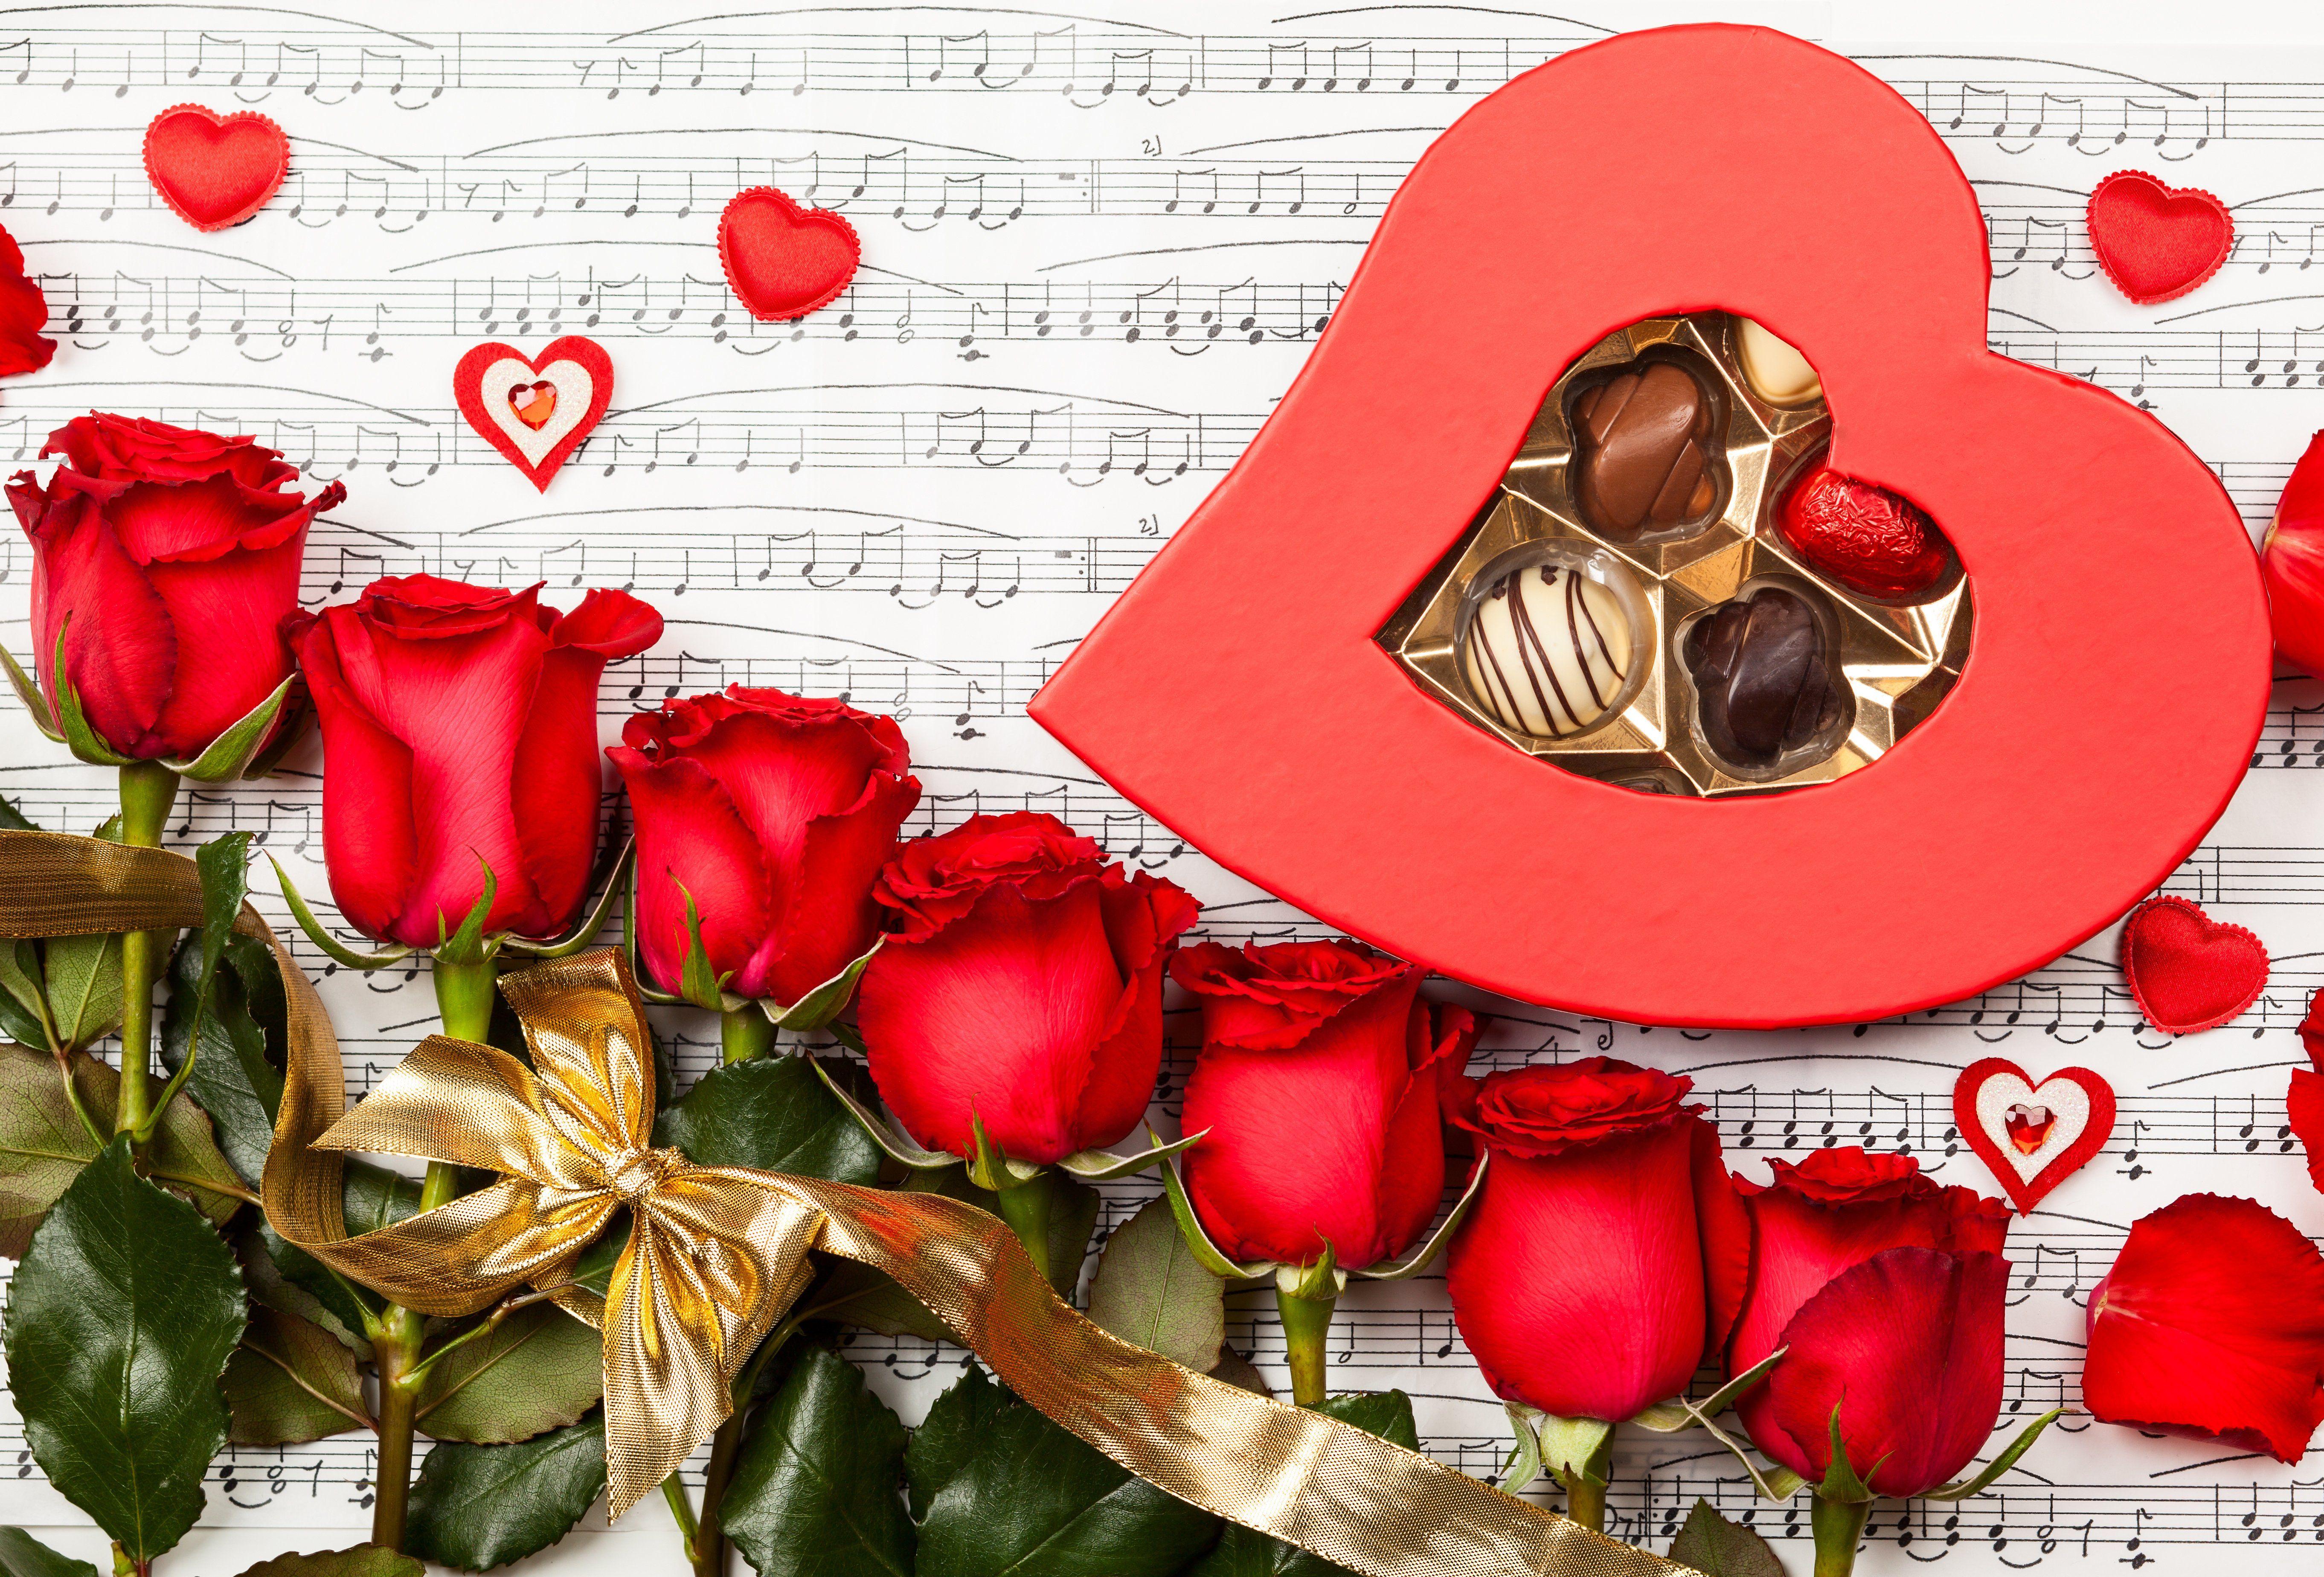 knumathise: Red Rose I Love You Wallpaper Image